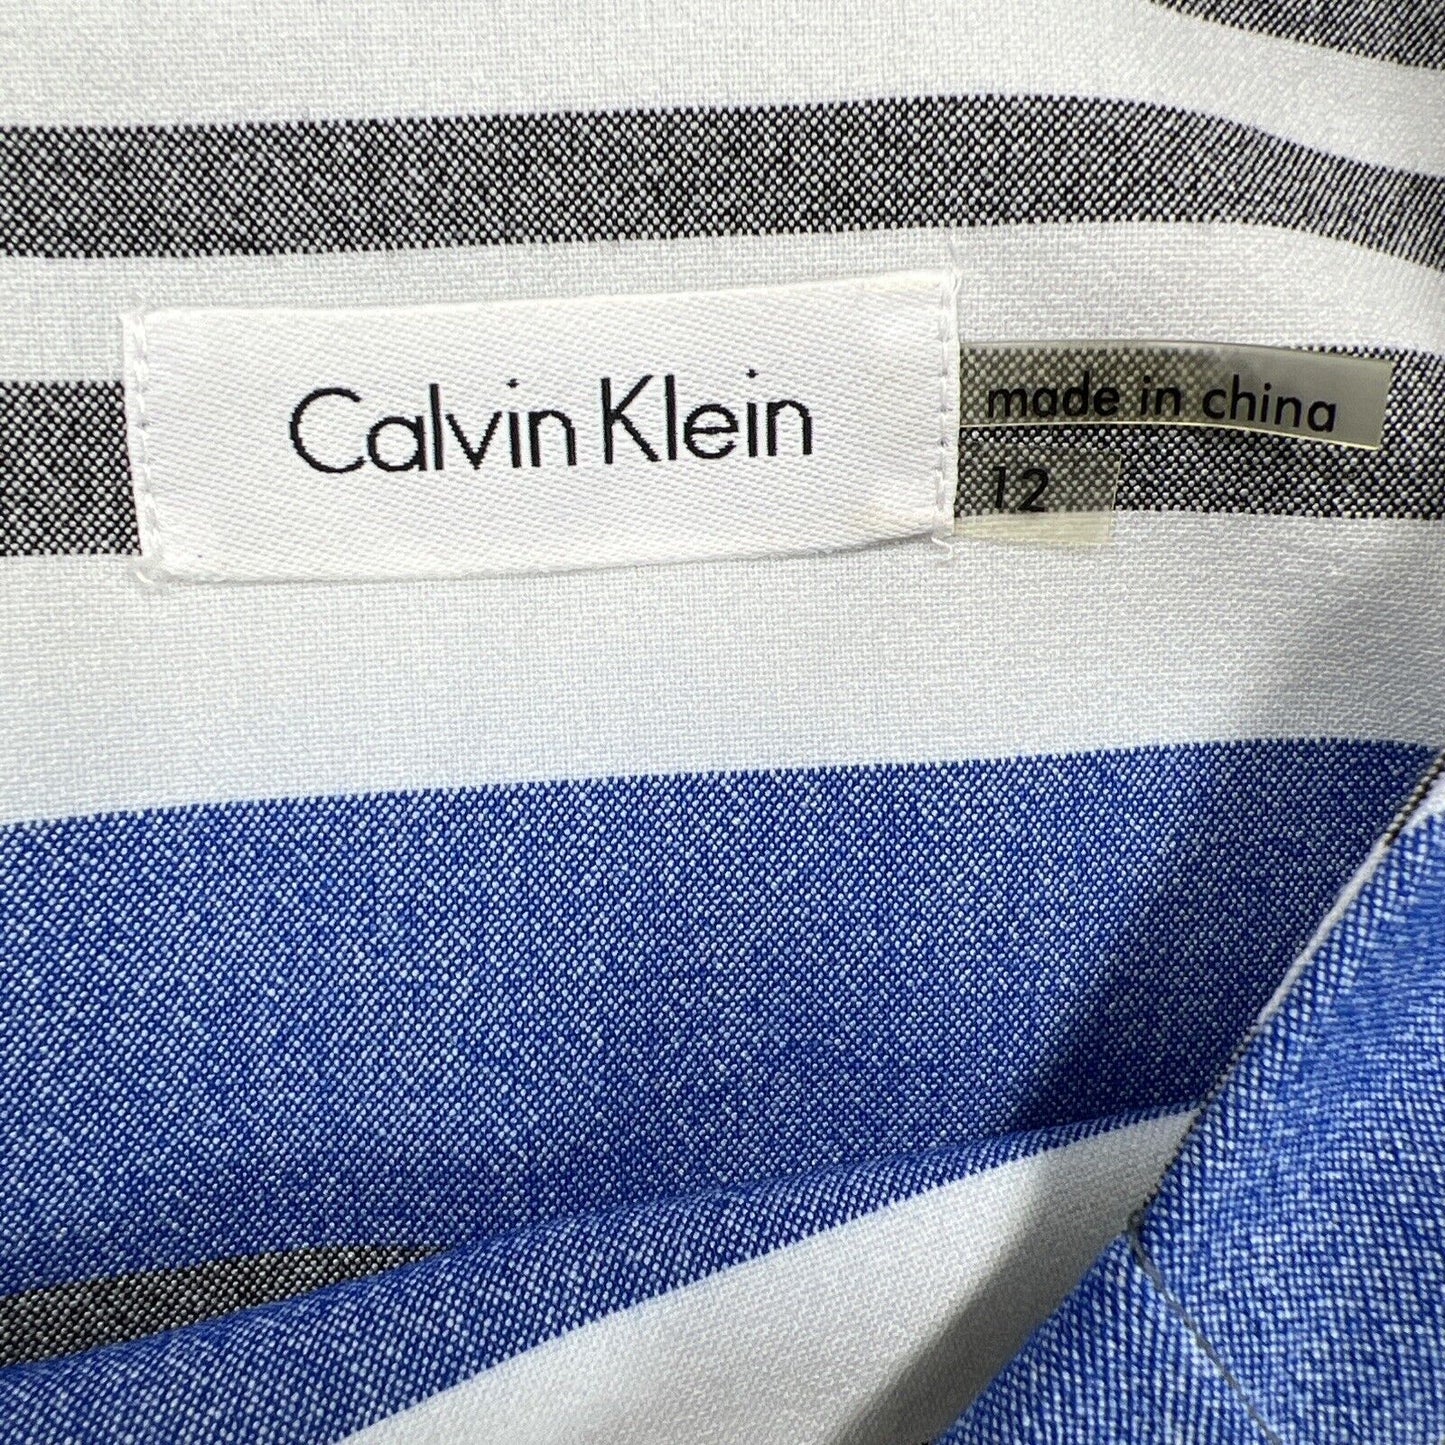 Calvin Klein Women's Gray/Blue Striped Sleeveless Sheath Dress - 12